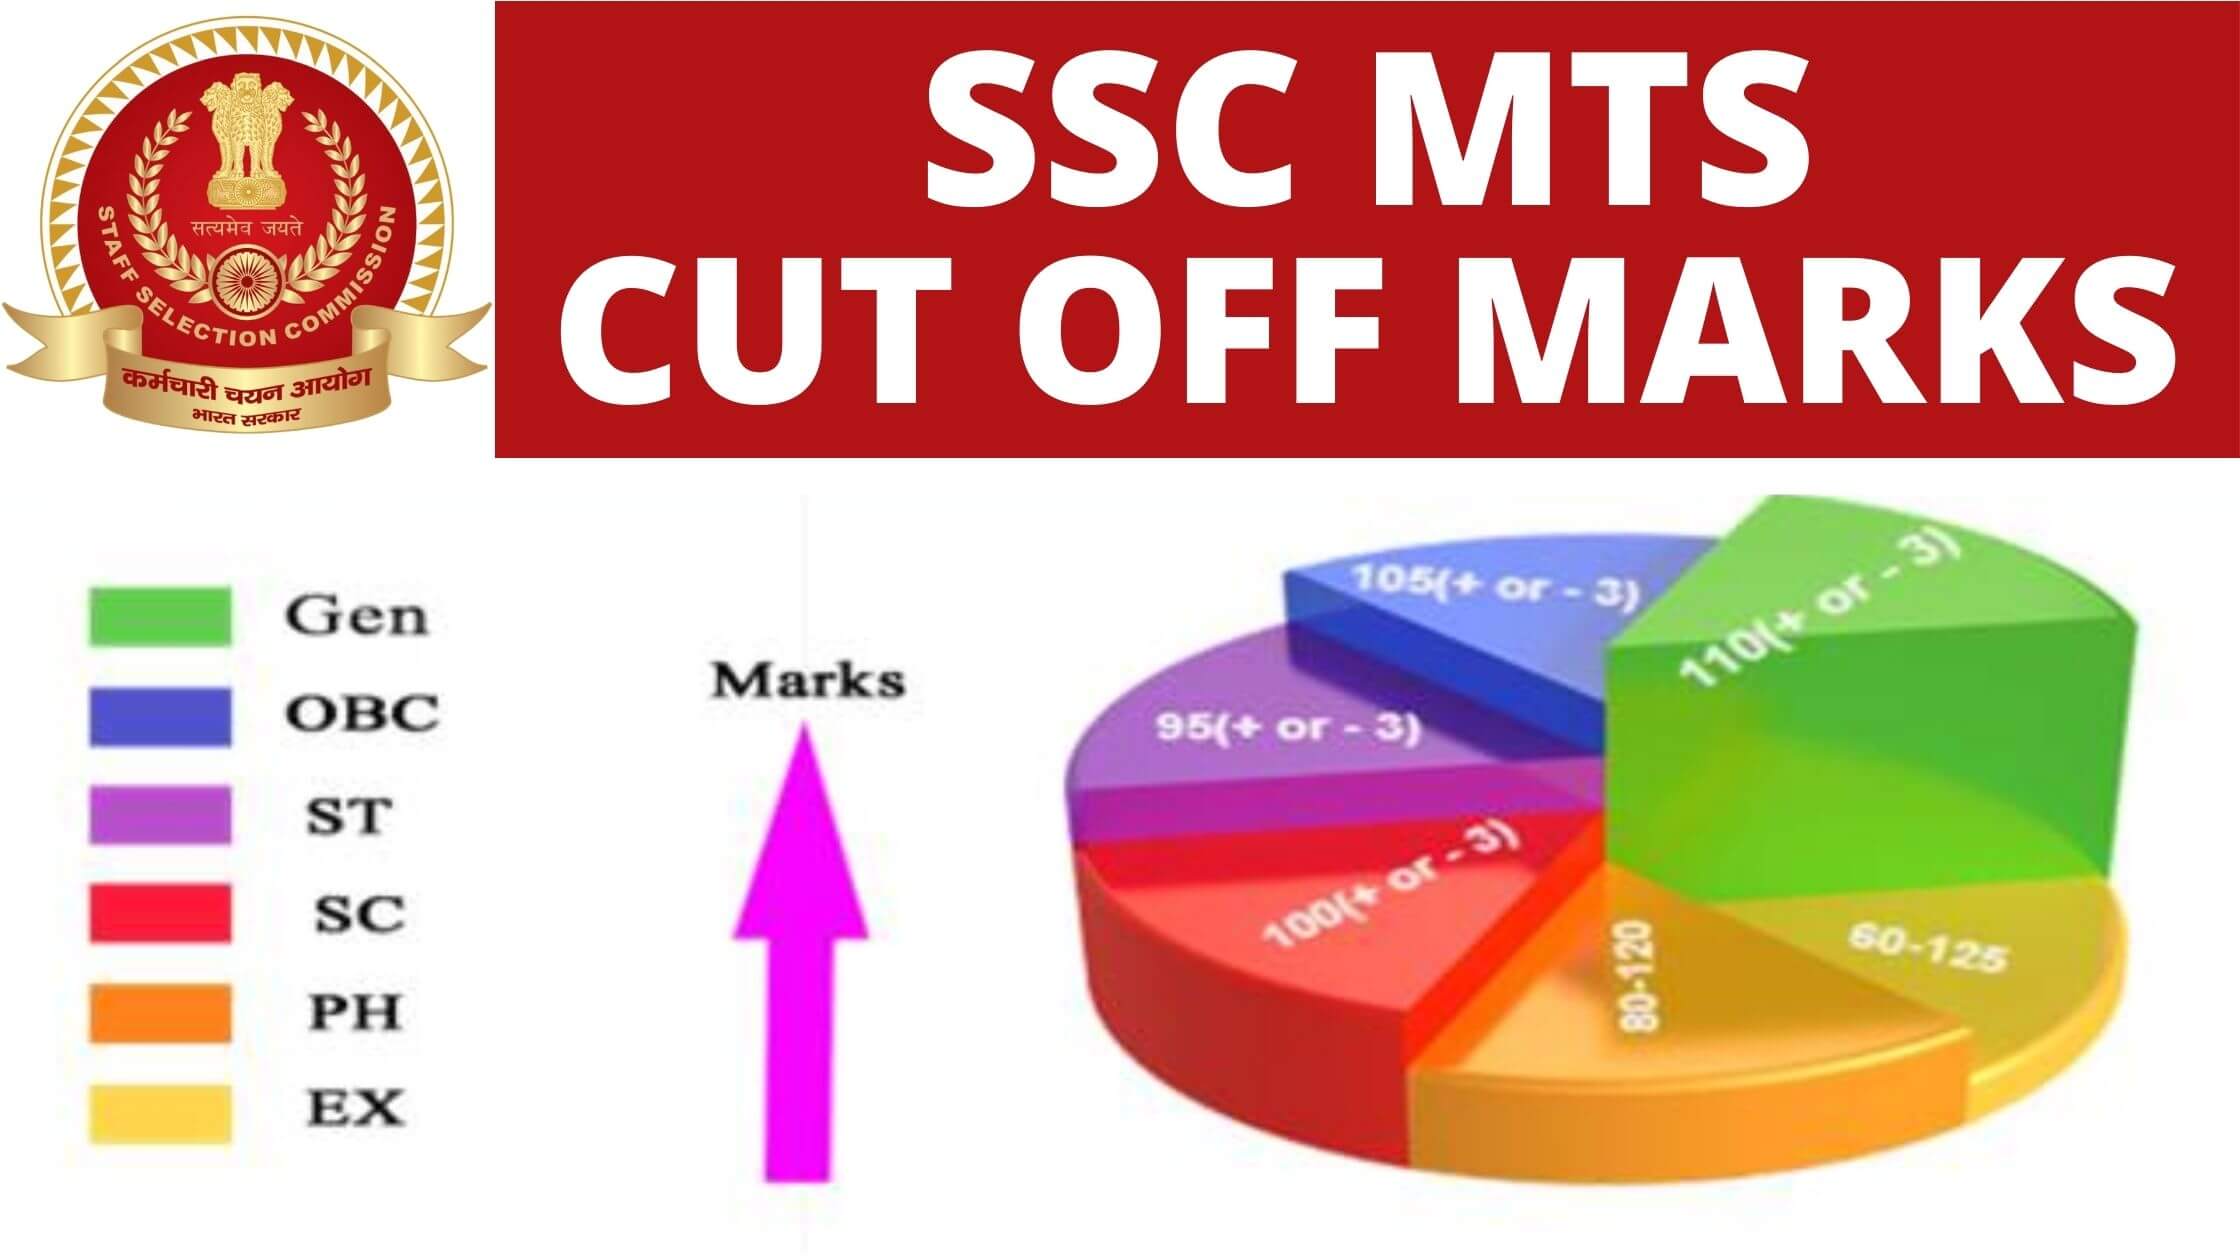 SSC MTS Cut Off